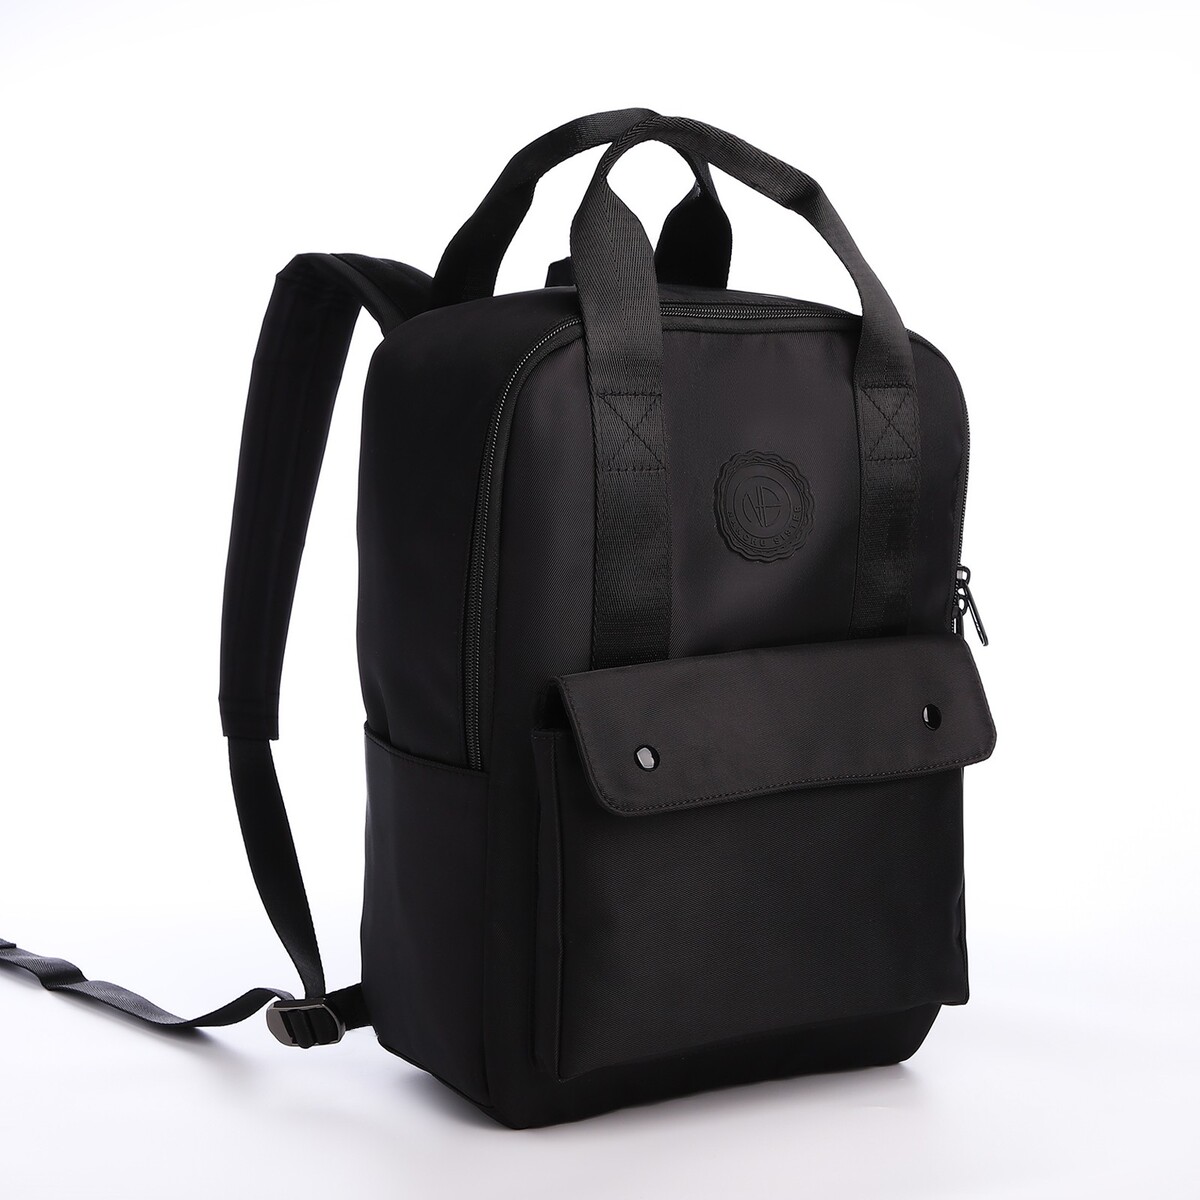 Рюкзак молодежный из текстиля на молнии, отдел для ноутбука, 4 кармана, цвет черный рюкзак для ноутбука 15 6 portcase kbp 132gr